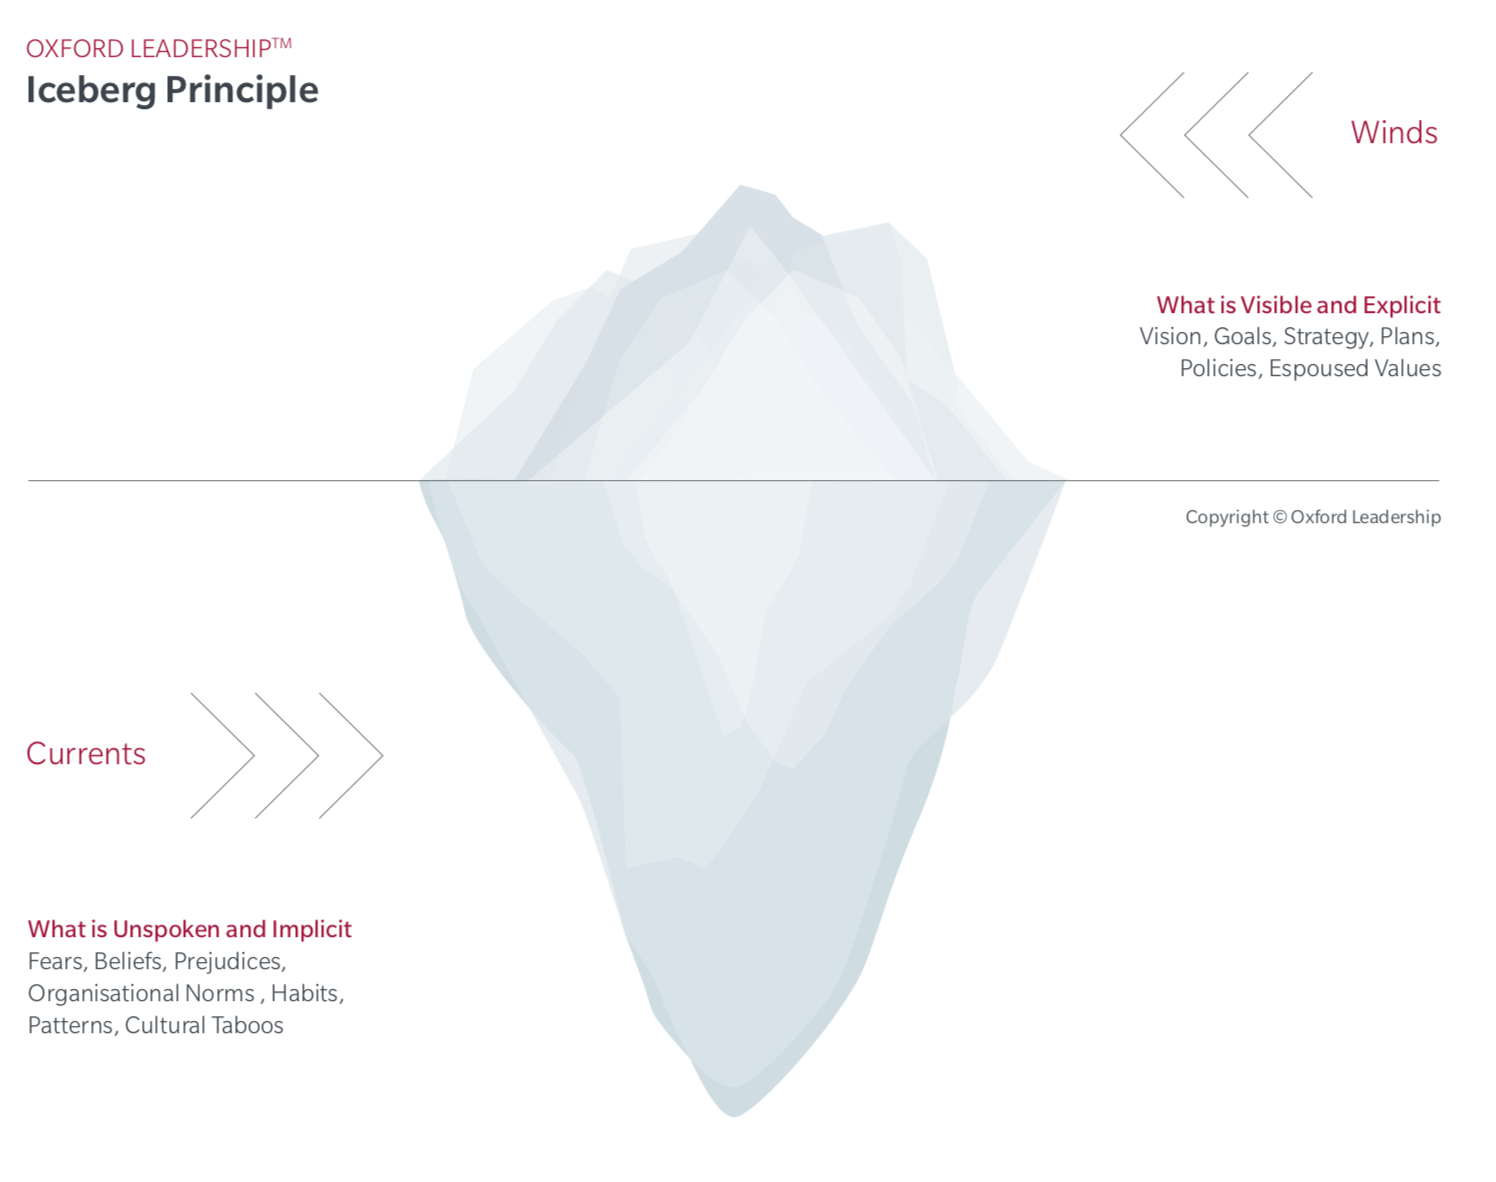 Iceberg principle